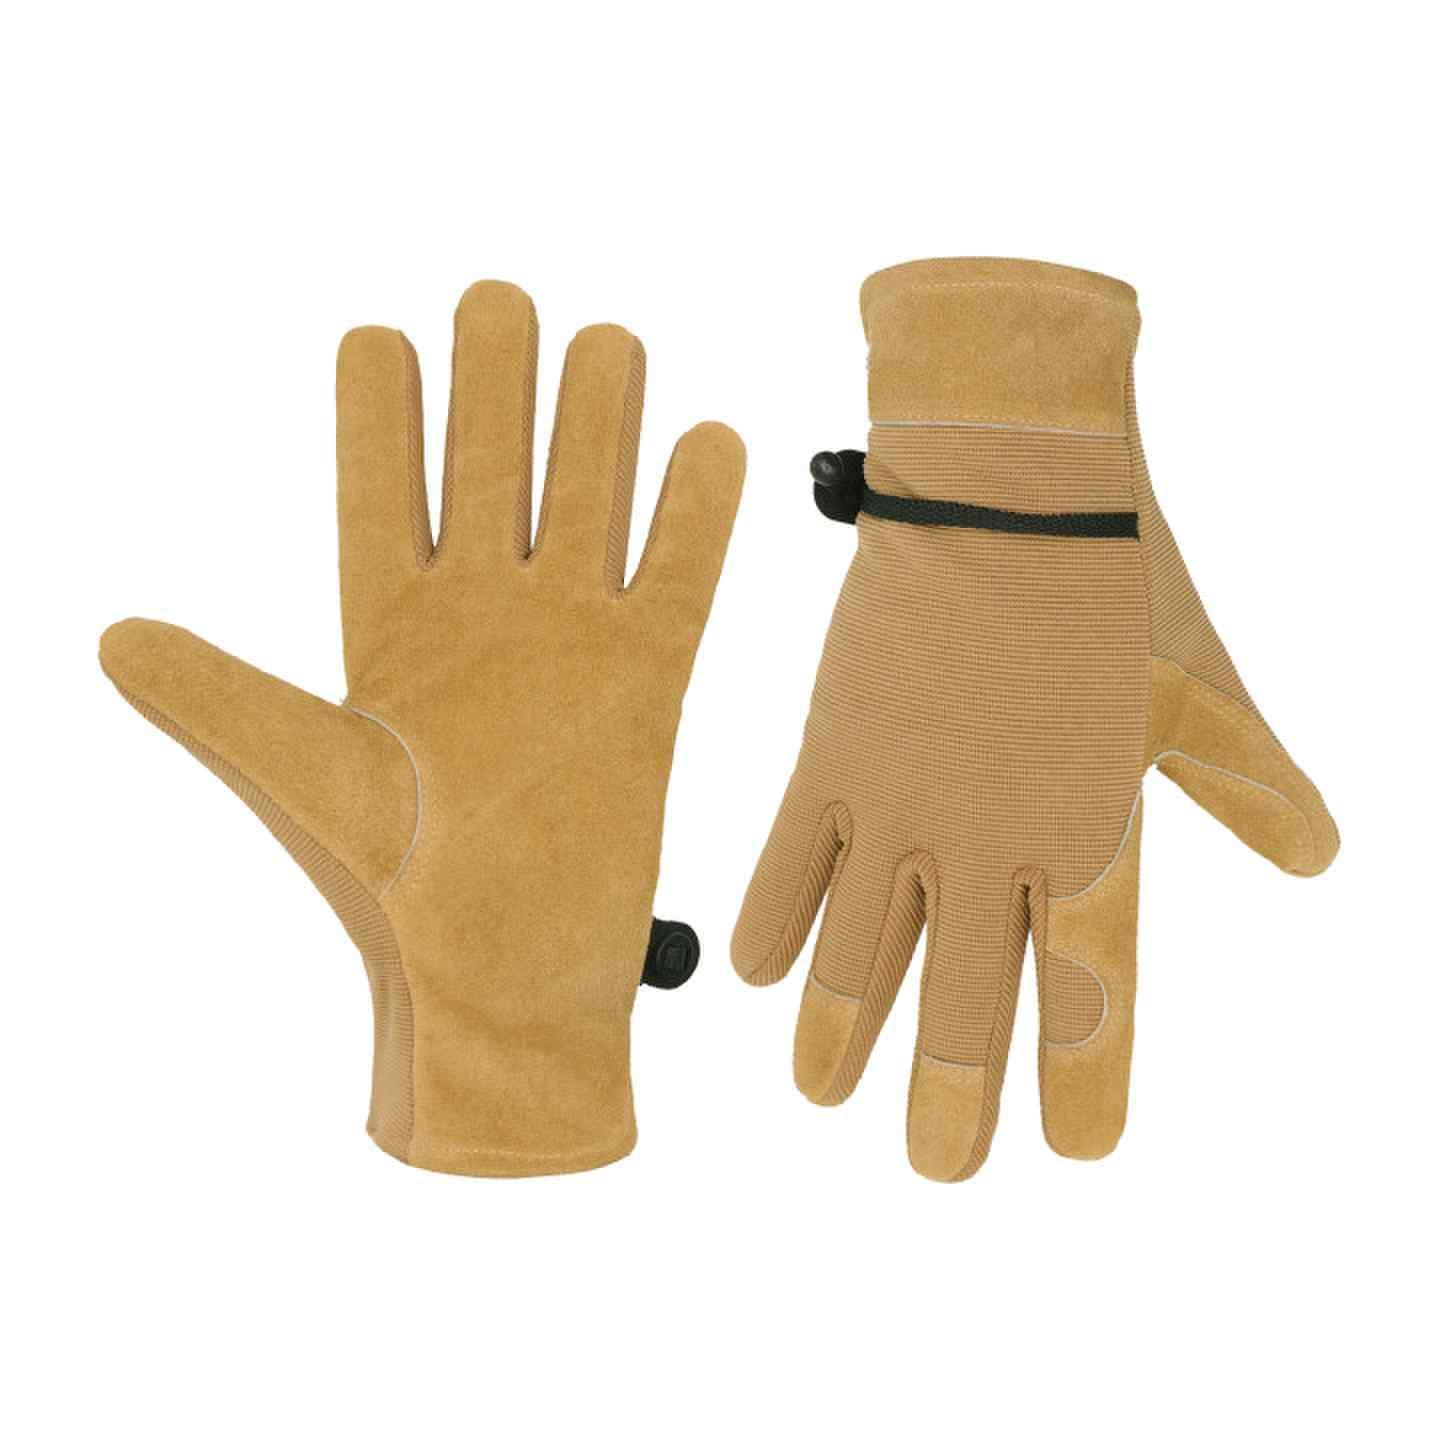 6167 PRISAFETY Gardening Gloves for Women Flexible & Durable, Breathable Utility Work Gloves Heavy Duty Leather Garden Yard Glove